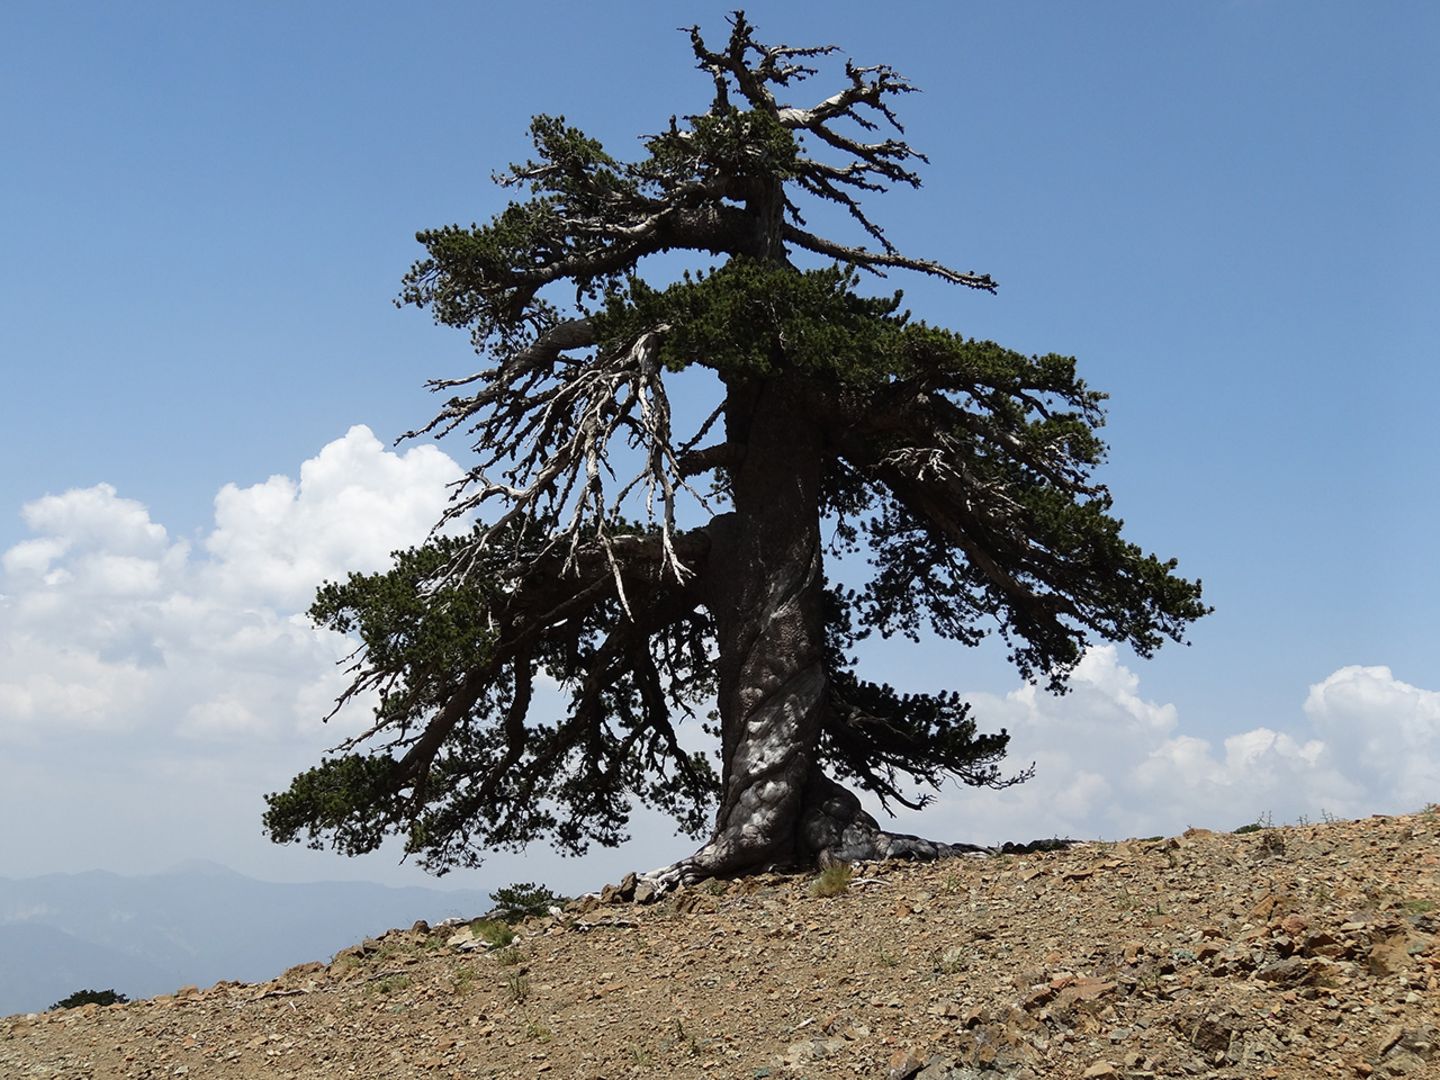 Adonis, ältester Baum Europas